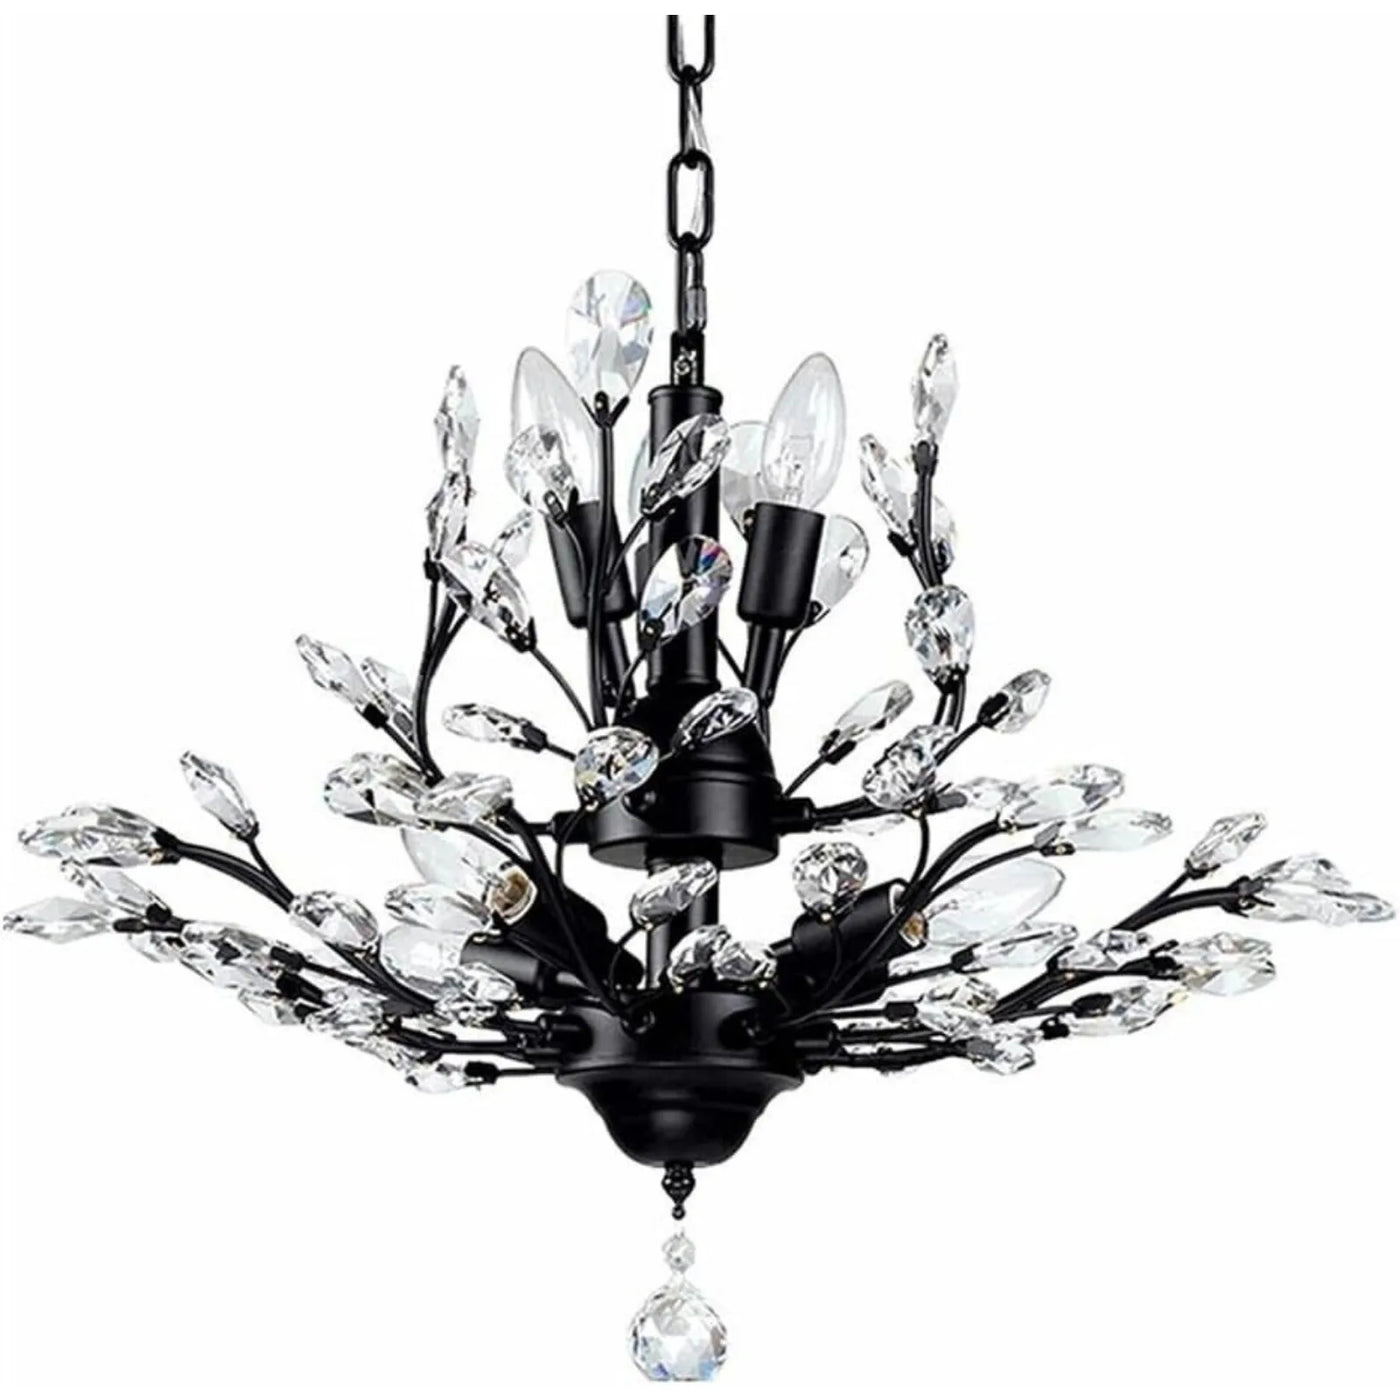 US Old Crystal Chandelier Flower Chandelier Black Pendant Lighting Fixture